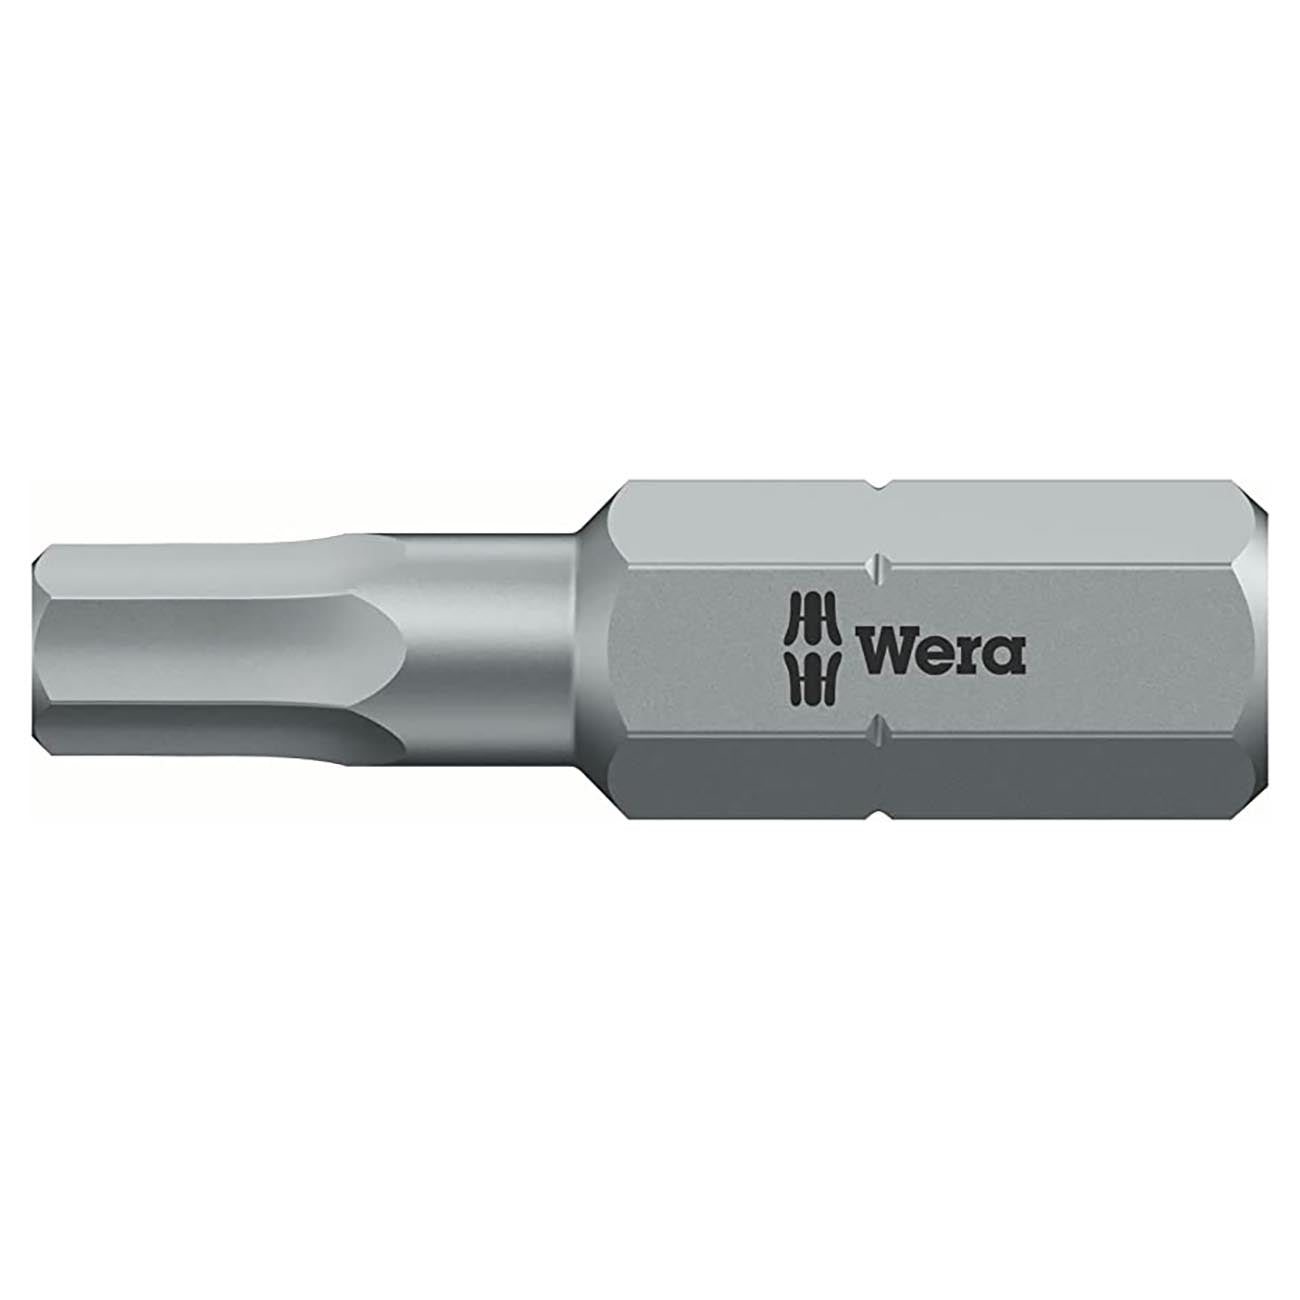 Wera Metric Hex-plus Bit Set (3-piece Set)